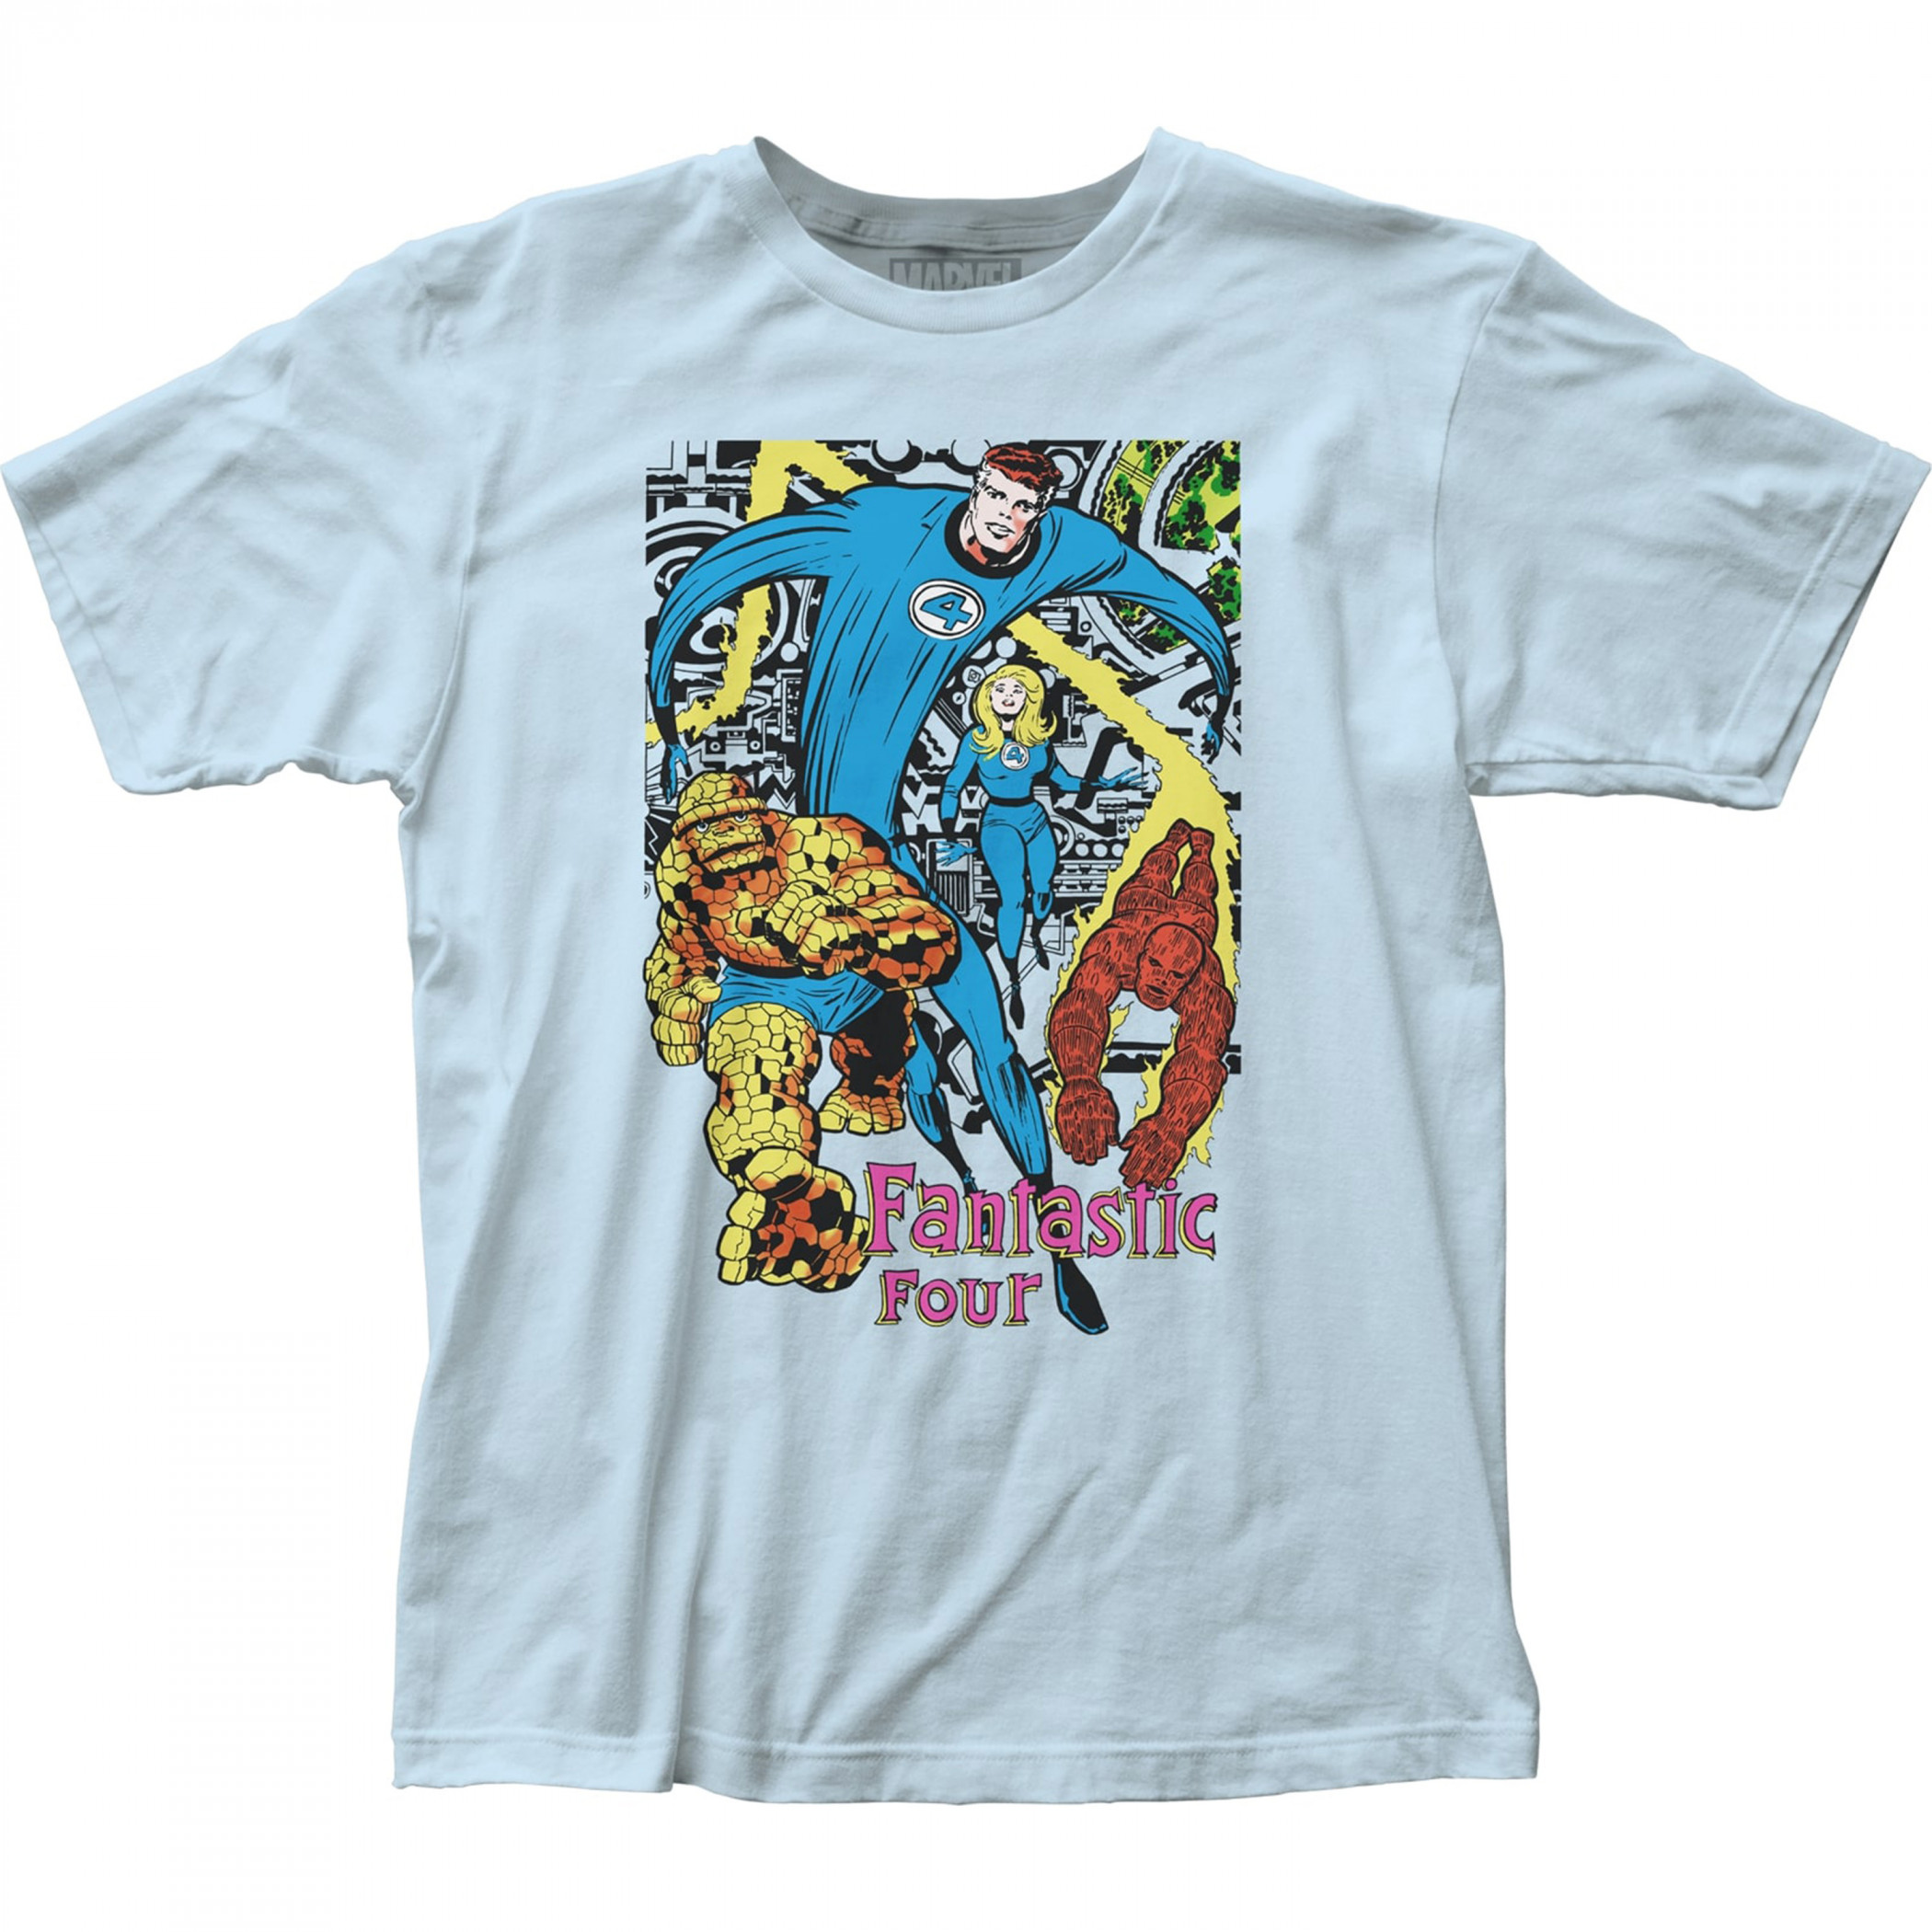 The Fantastic Four Retro Group T-Shirt